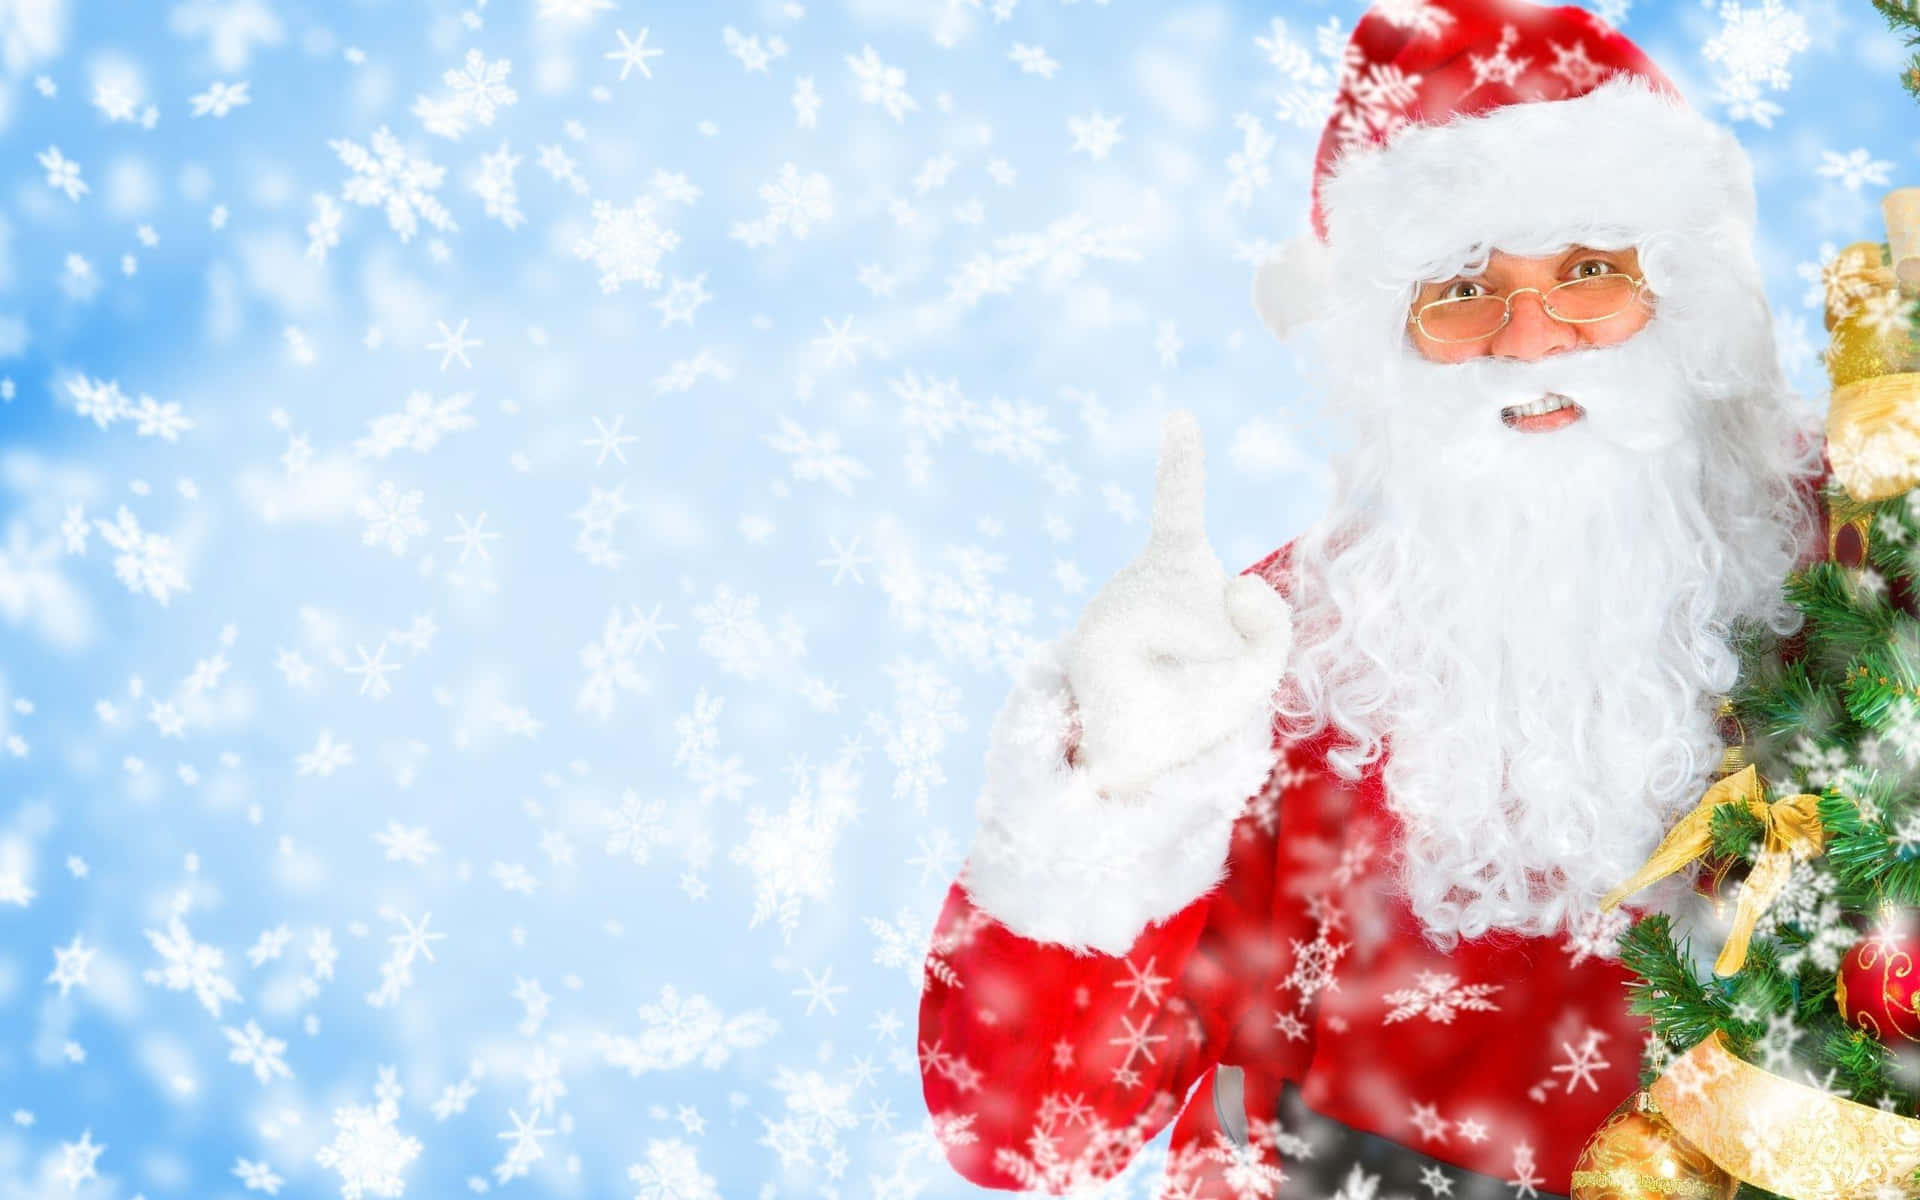 Ho! Ho! Ho! Santa Claus arrives to spread festive cheer. Wallpaper